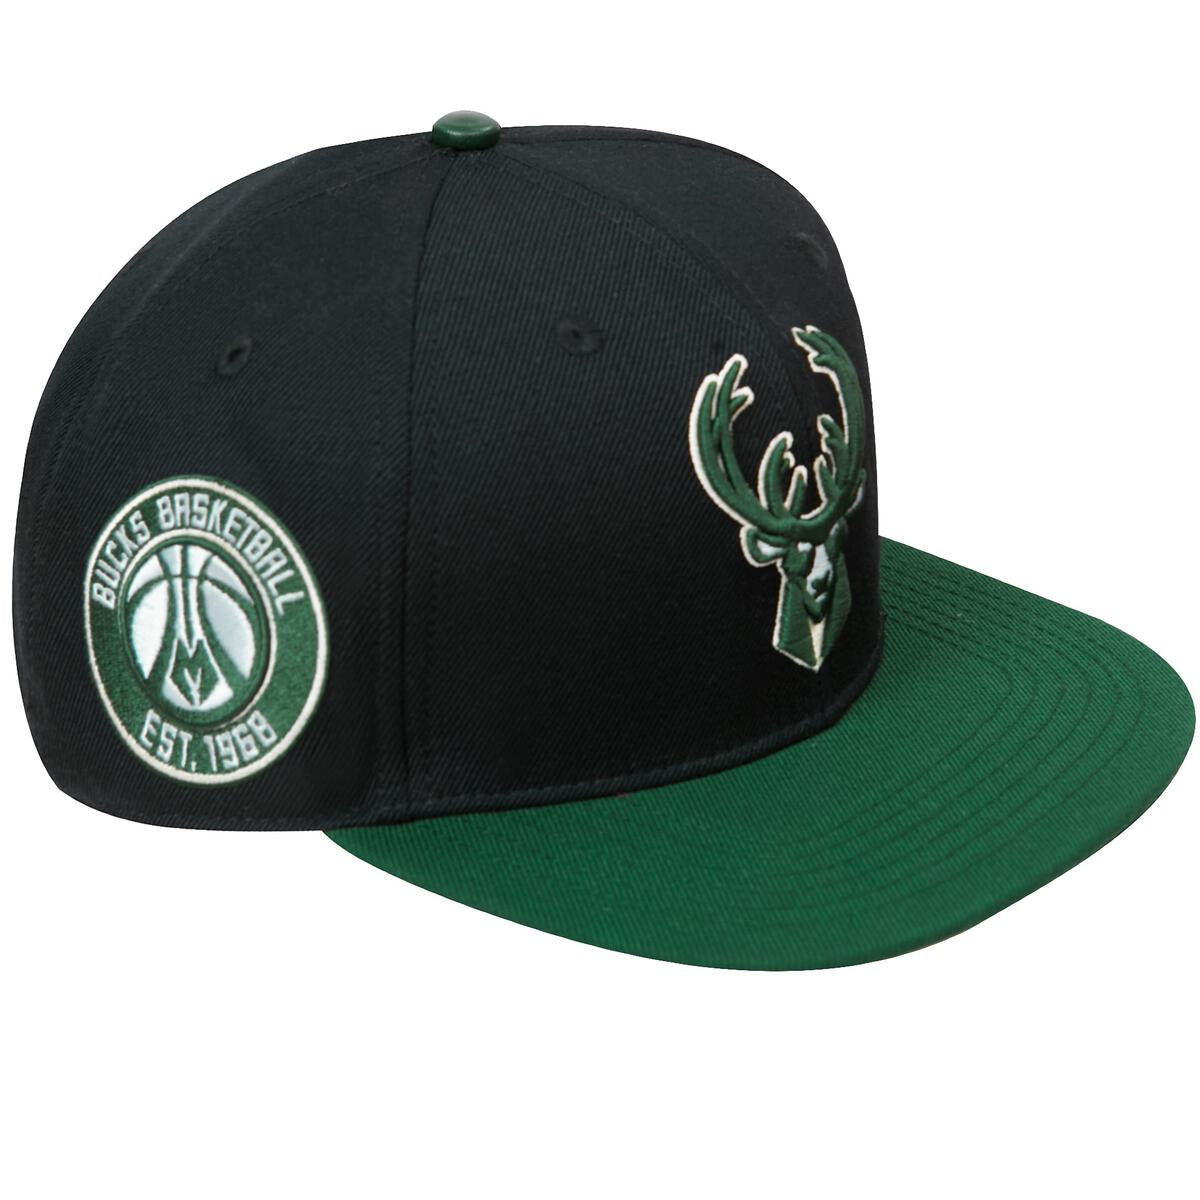 Pro Standard - Milwaukee Bucks Retro Classic Snapback Hat - Black/Forest Green